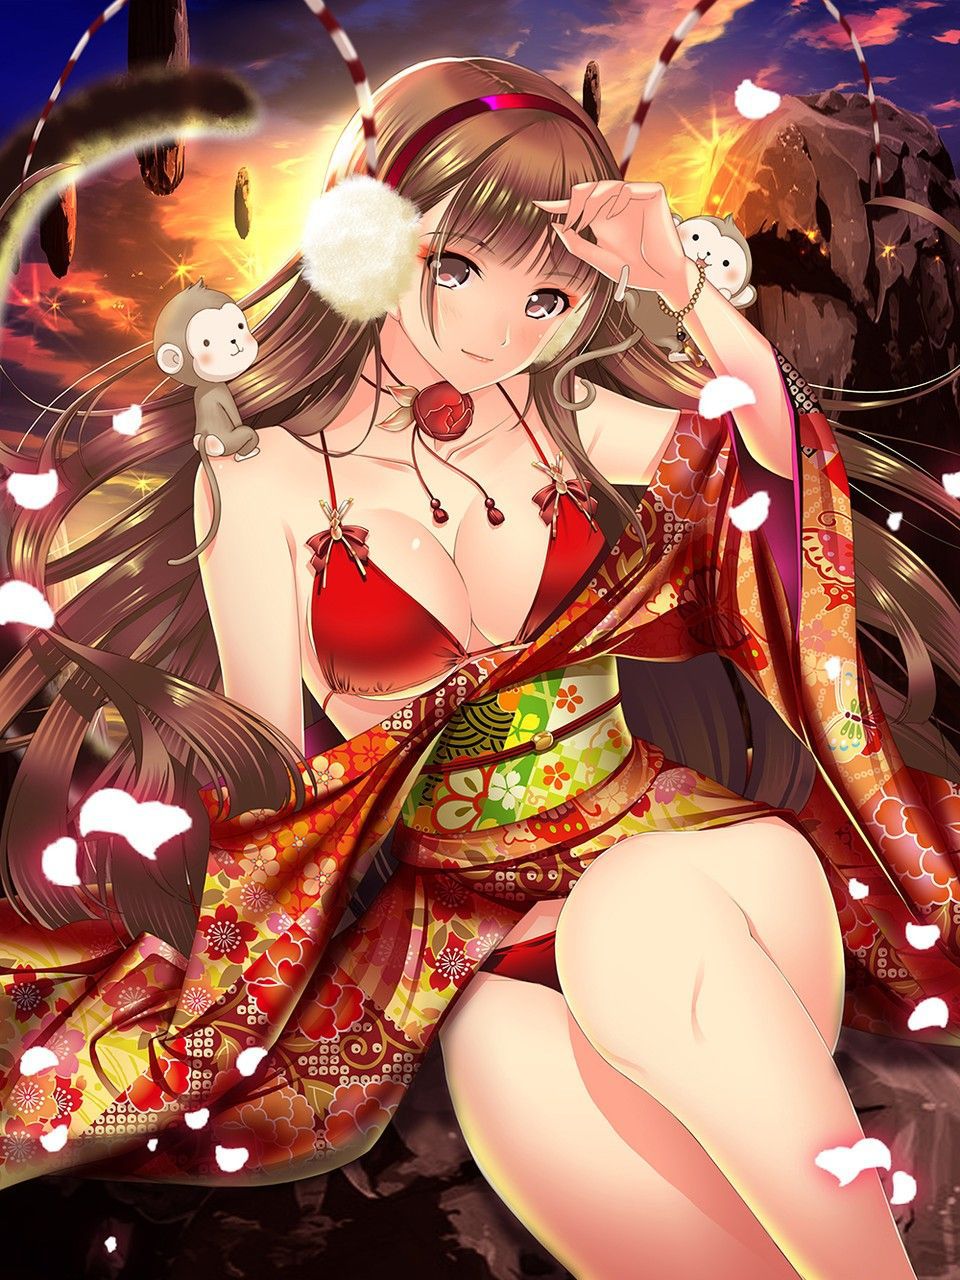 Secondary fetish image of kimono and yukata. 2